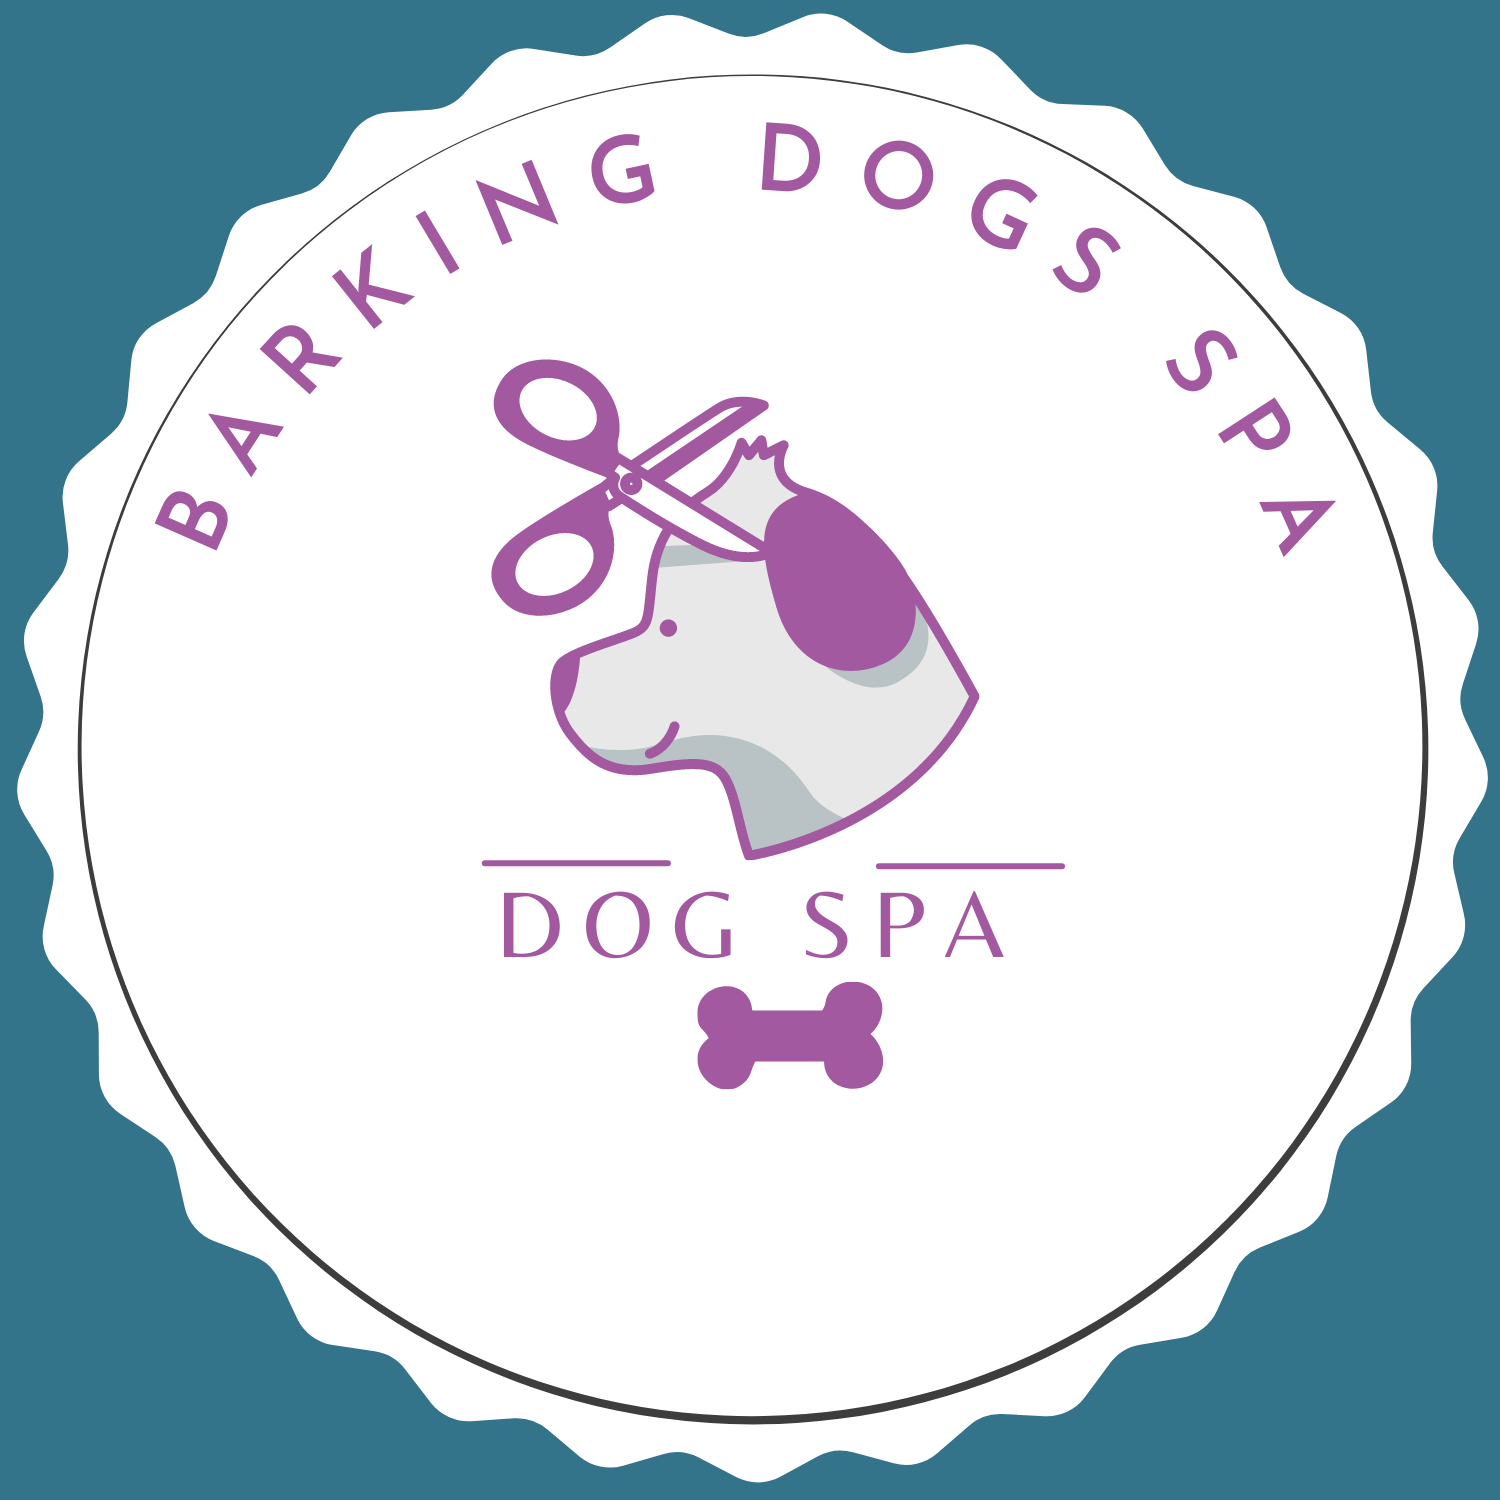 Barking Dogs Spa